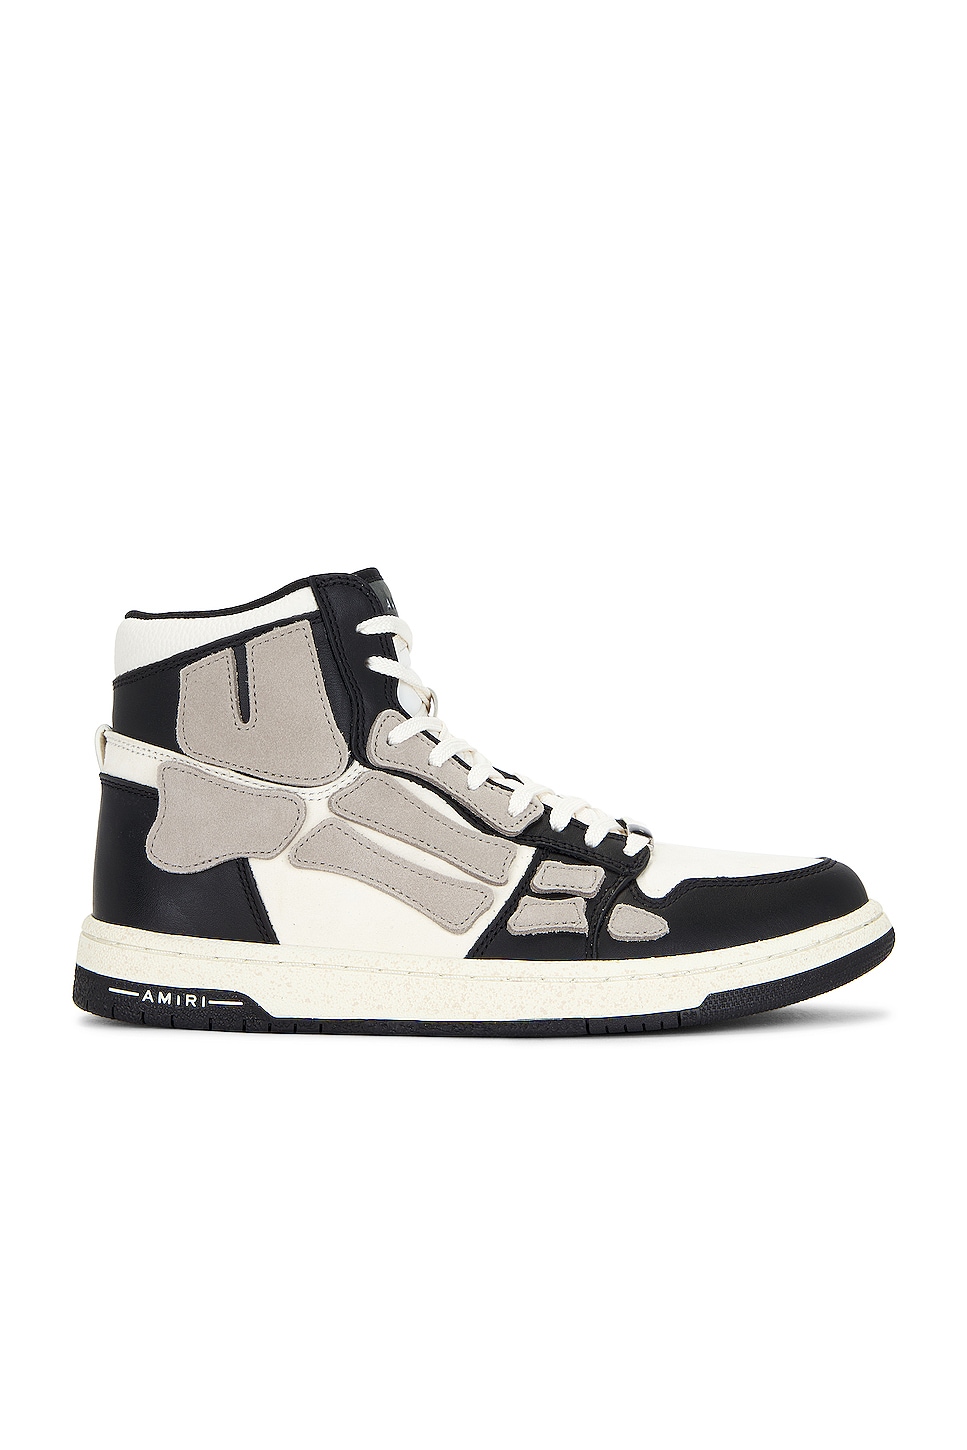 Image 1 of Amiri Skeltop High Sneaker in Black & Alabaster